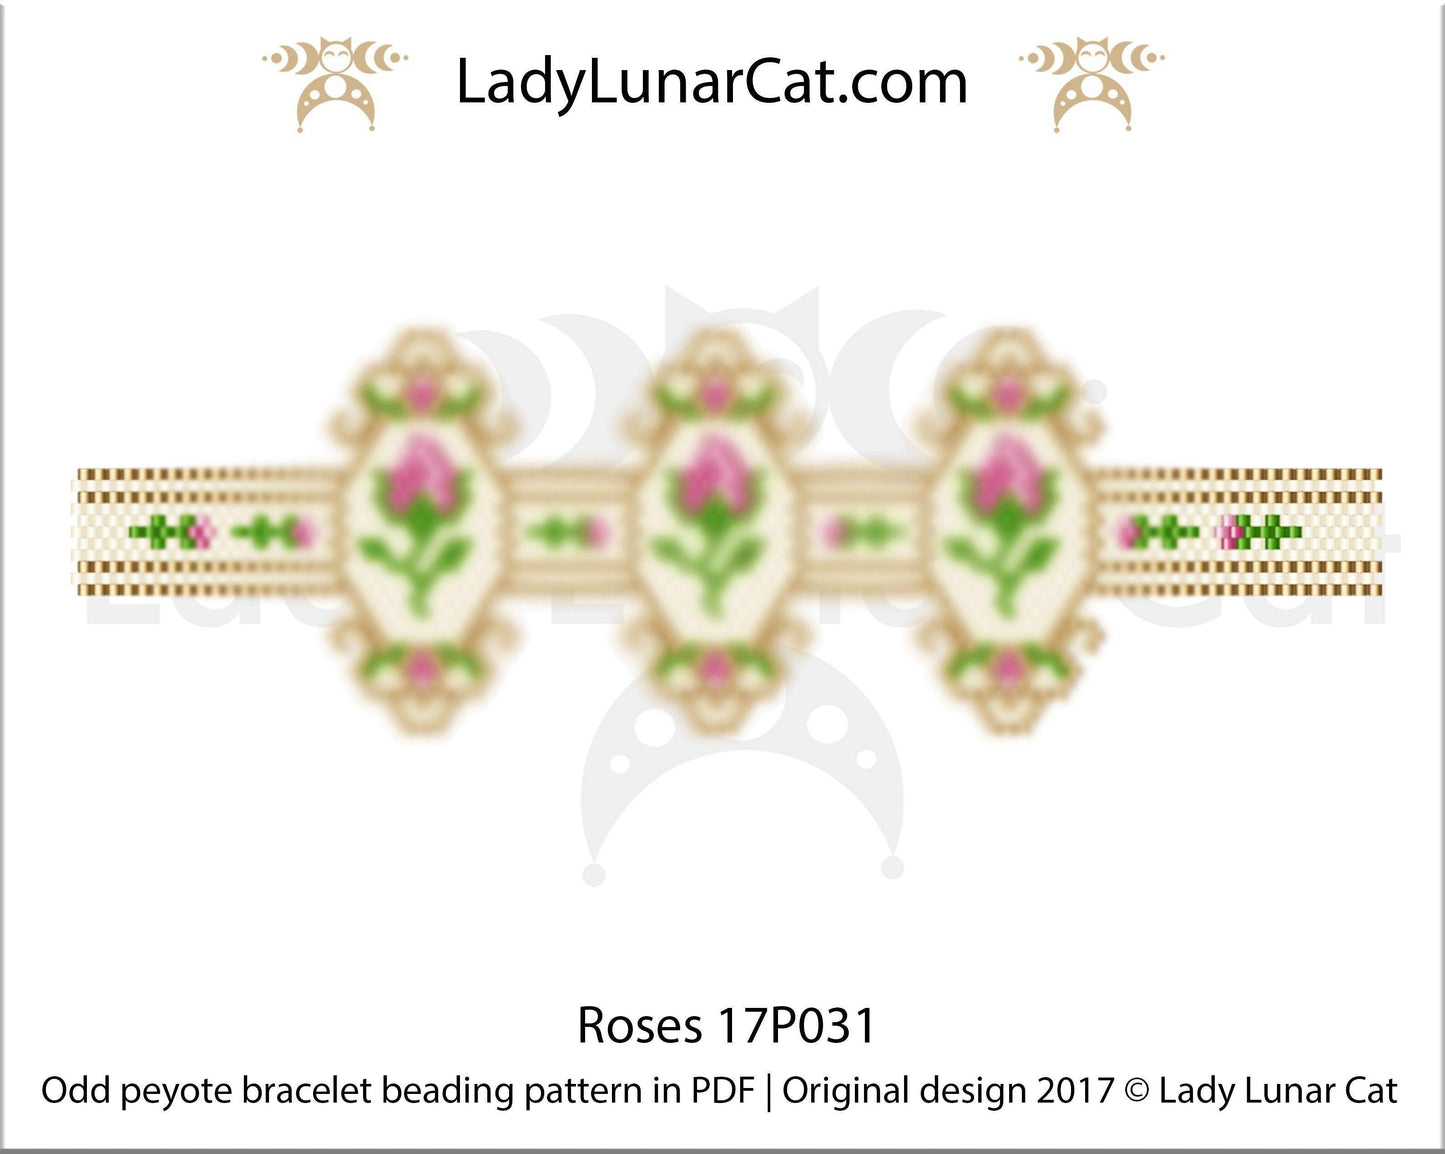 Copy of Even count peyote bracelet beading pattern Spring flowers LadyLunarCat